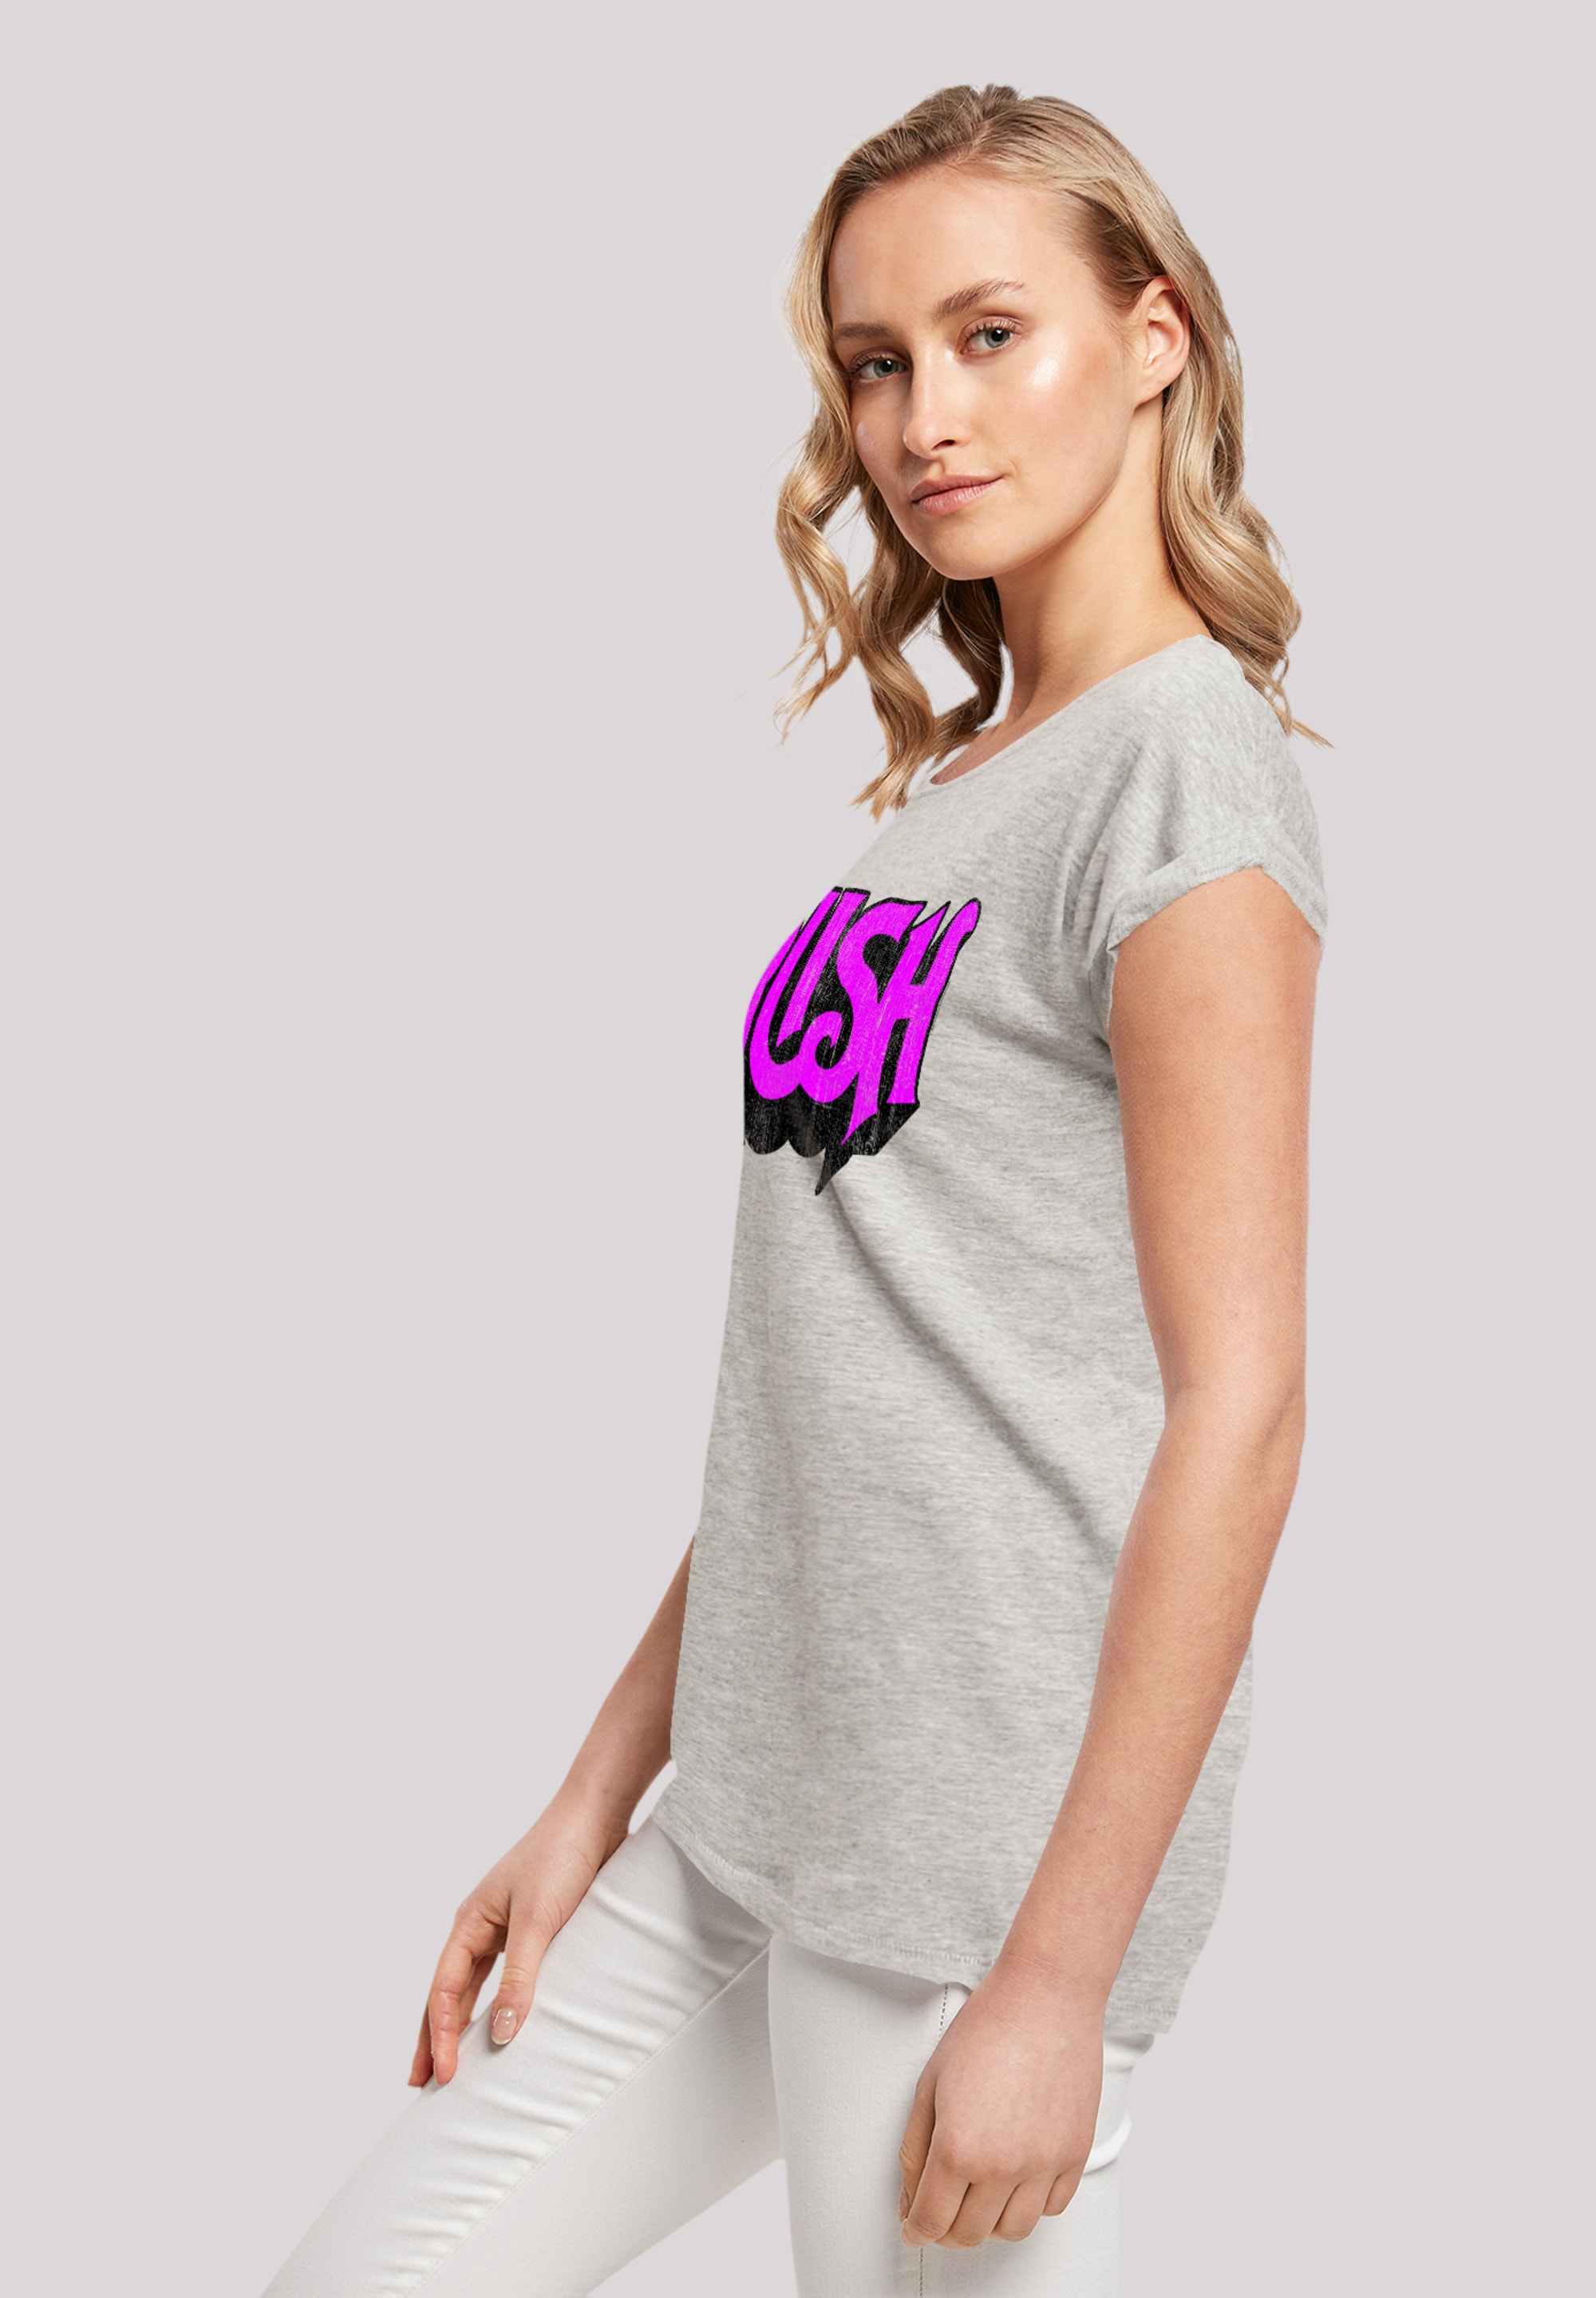 Qualität »Rush Premium Rock I\'m | F4NT4STIC walking T-Shirt Distressed Logo«, Band